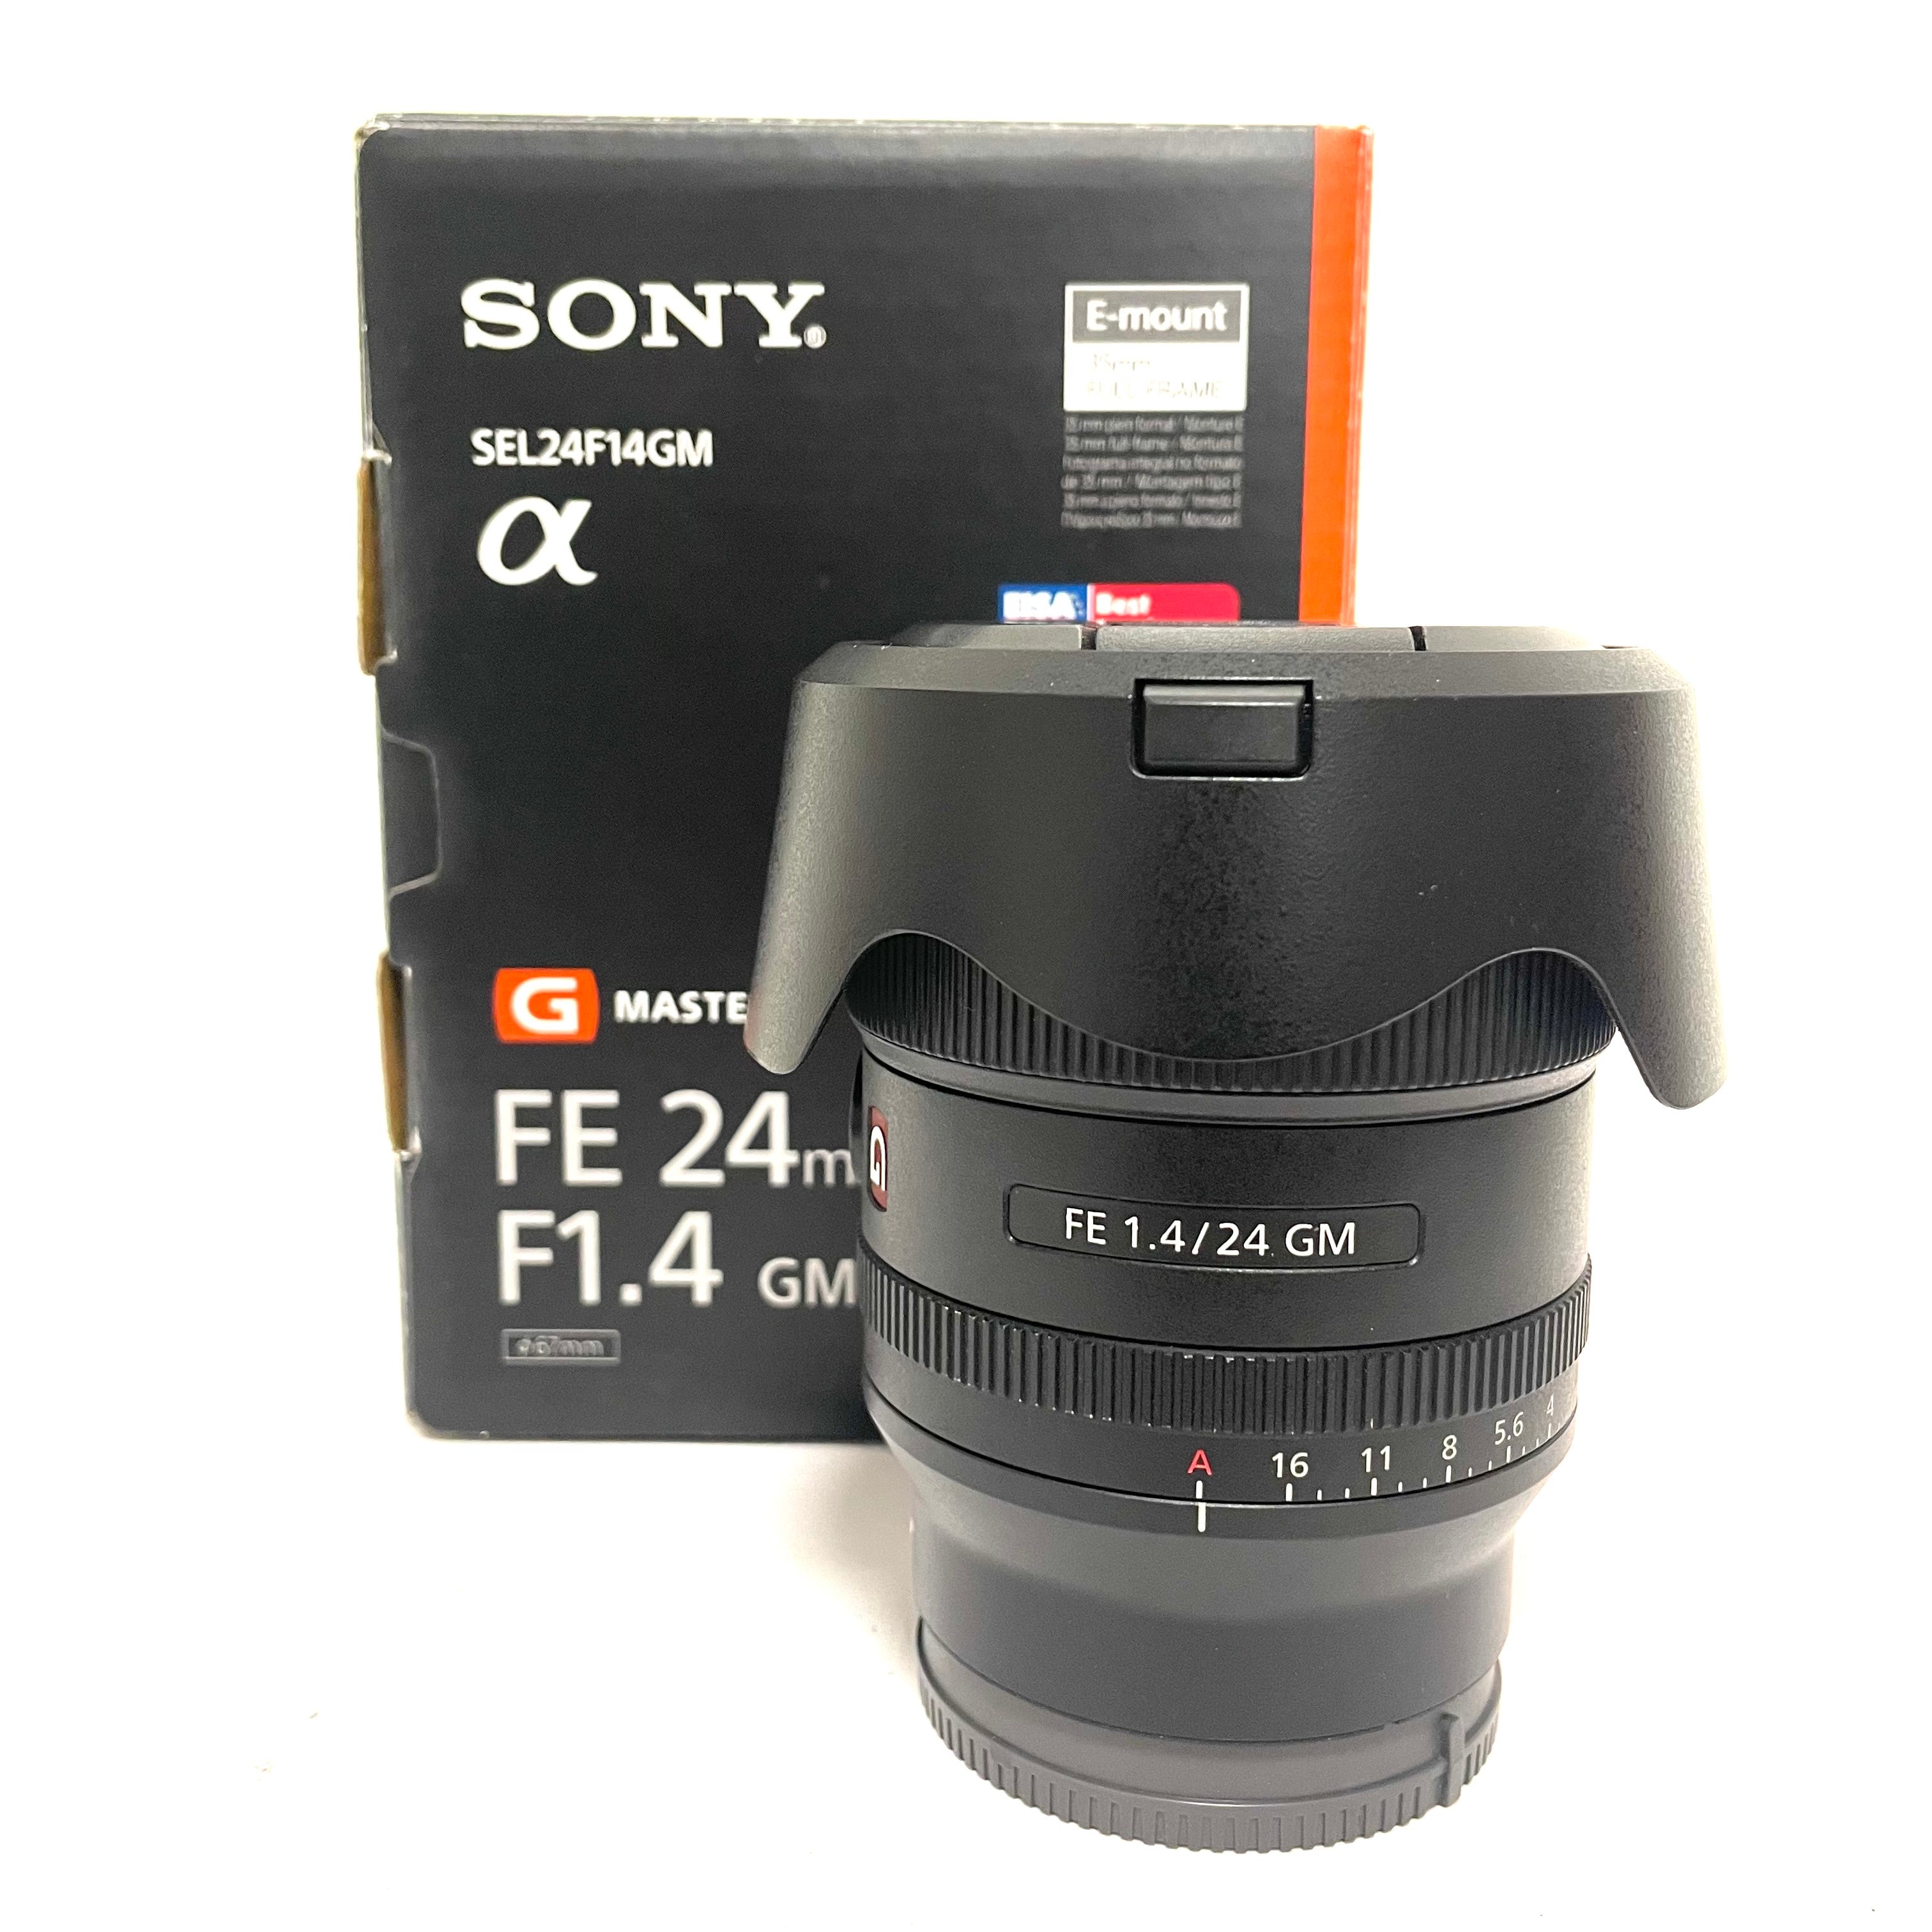 Sony Fe 24mm f/1.4 GM usato